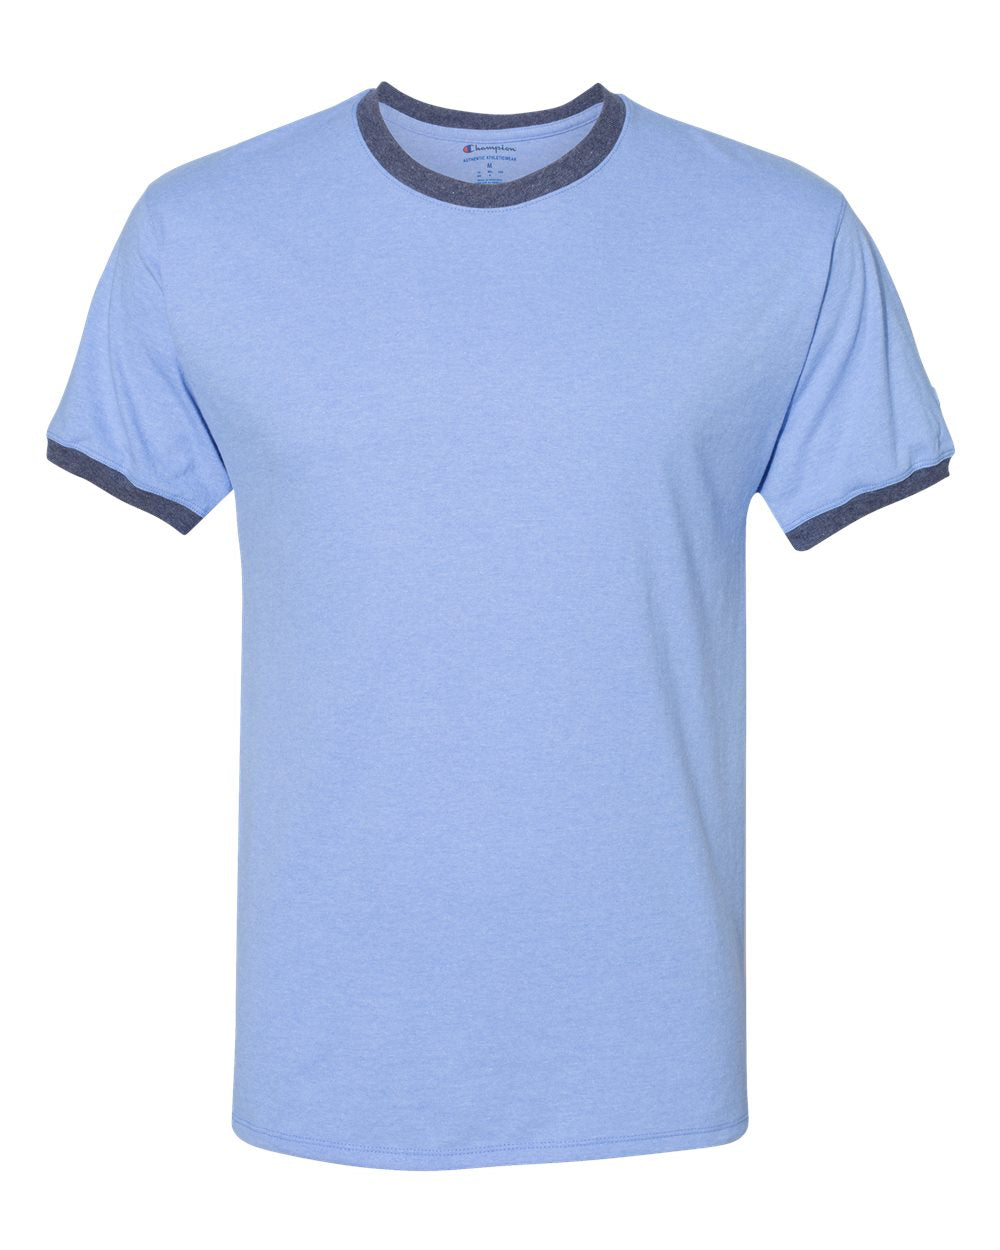 champion ringer t-shirt light blue heather navy heather